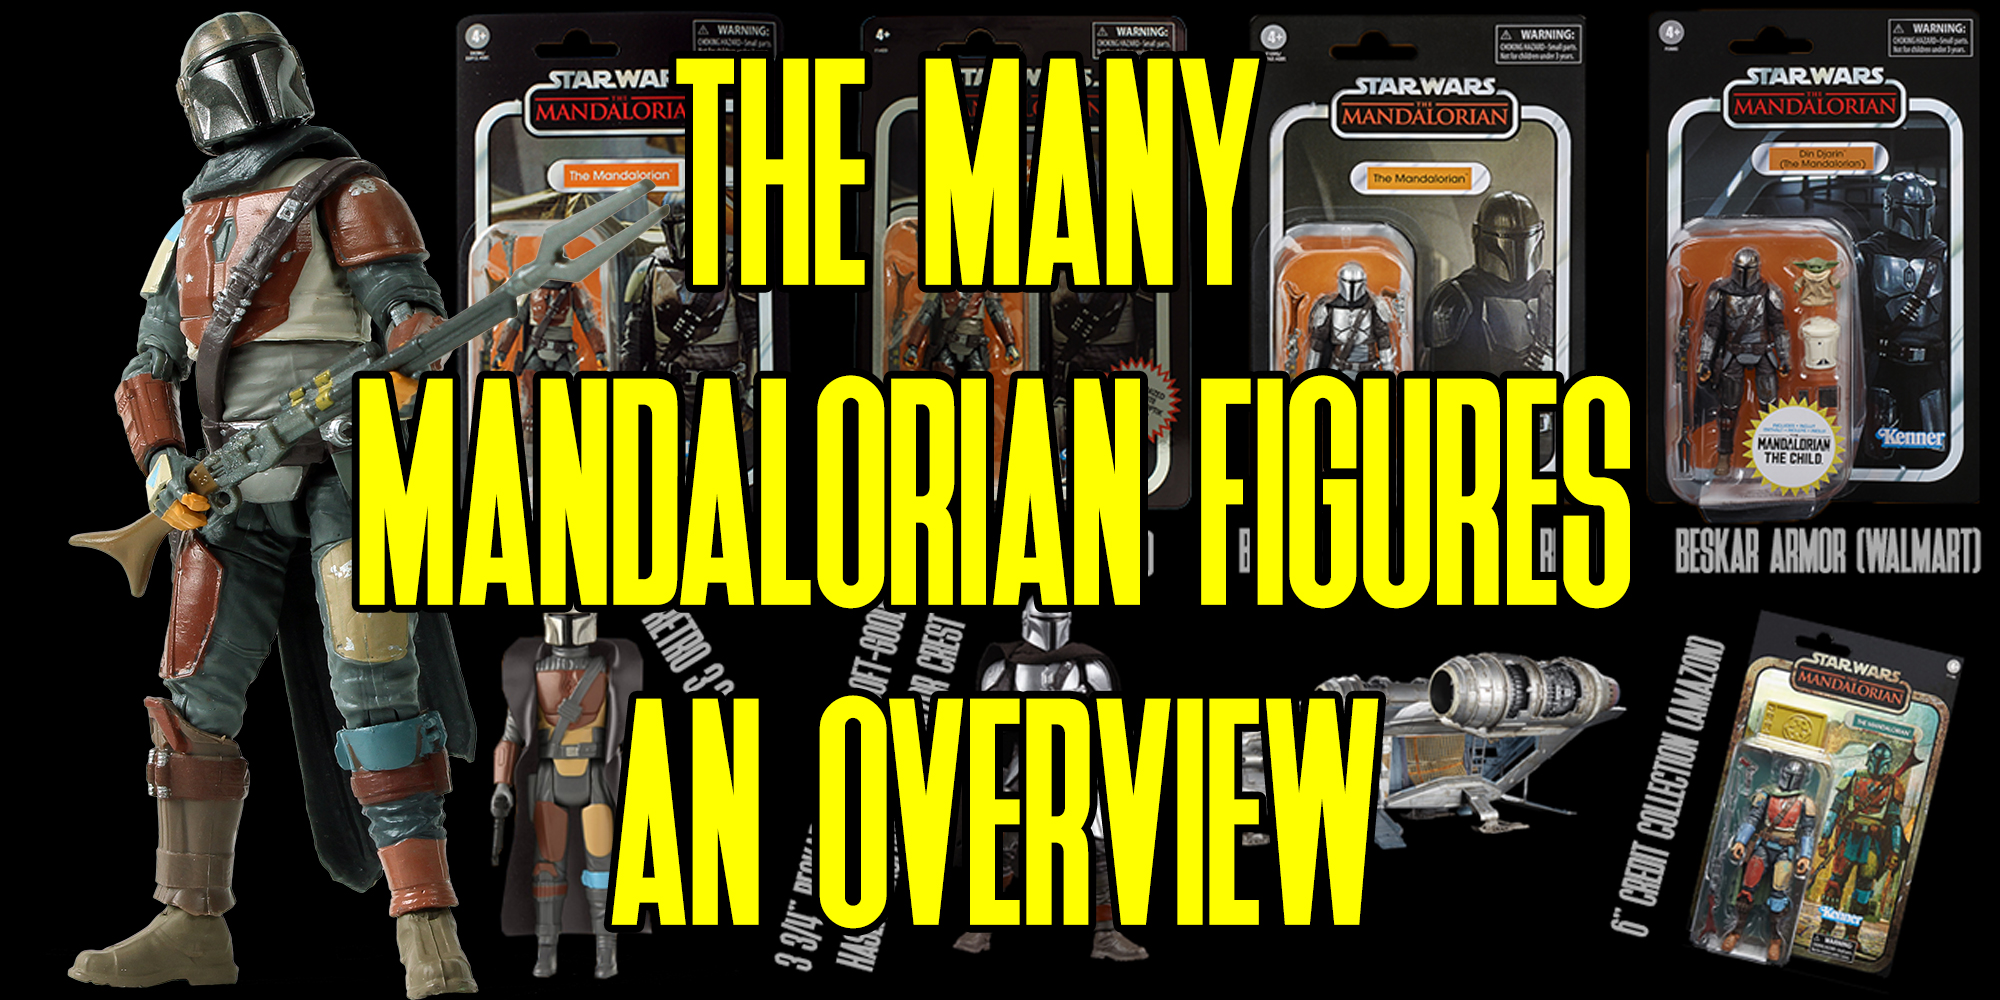 Mandalorian overview